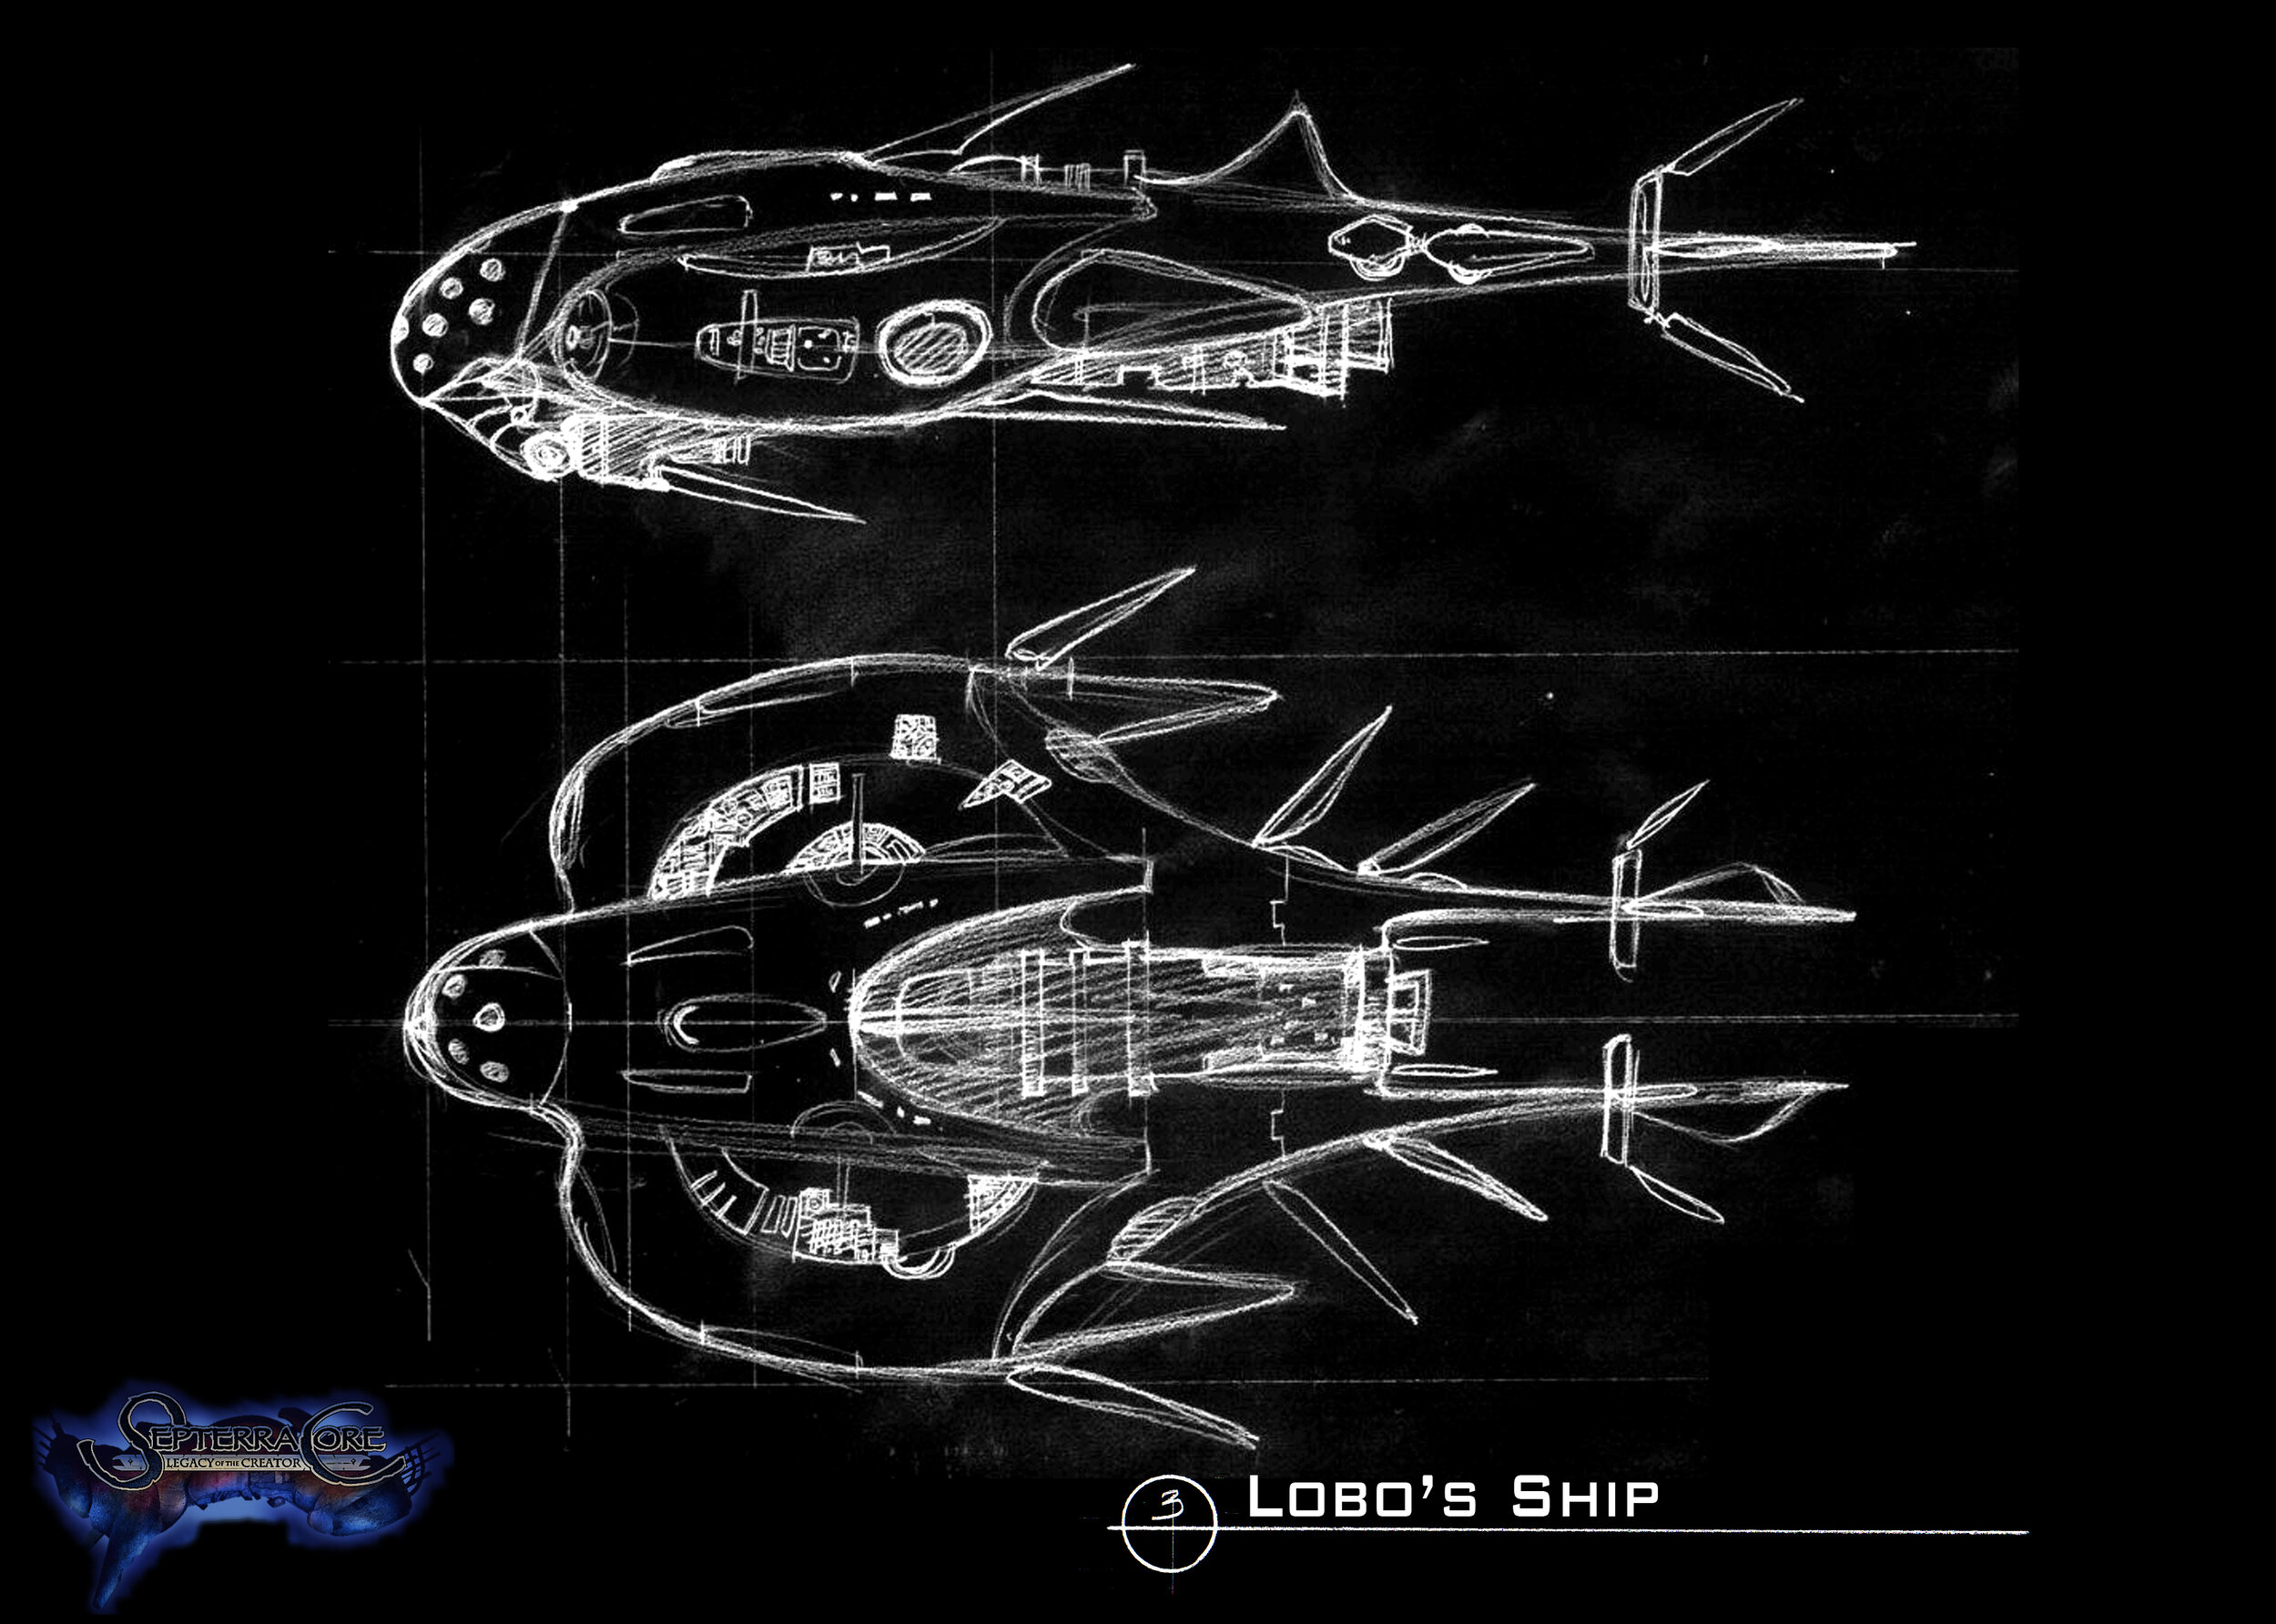 09Ship_Lobo02.jpg